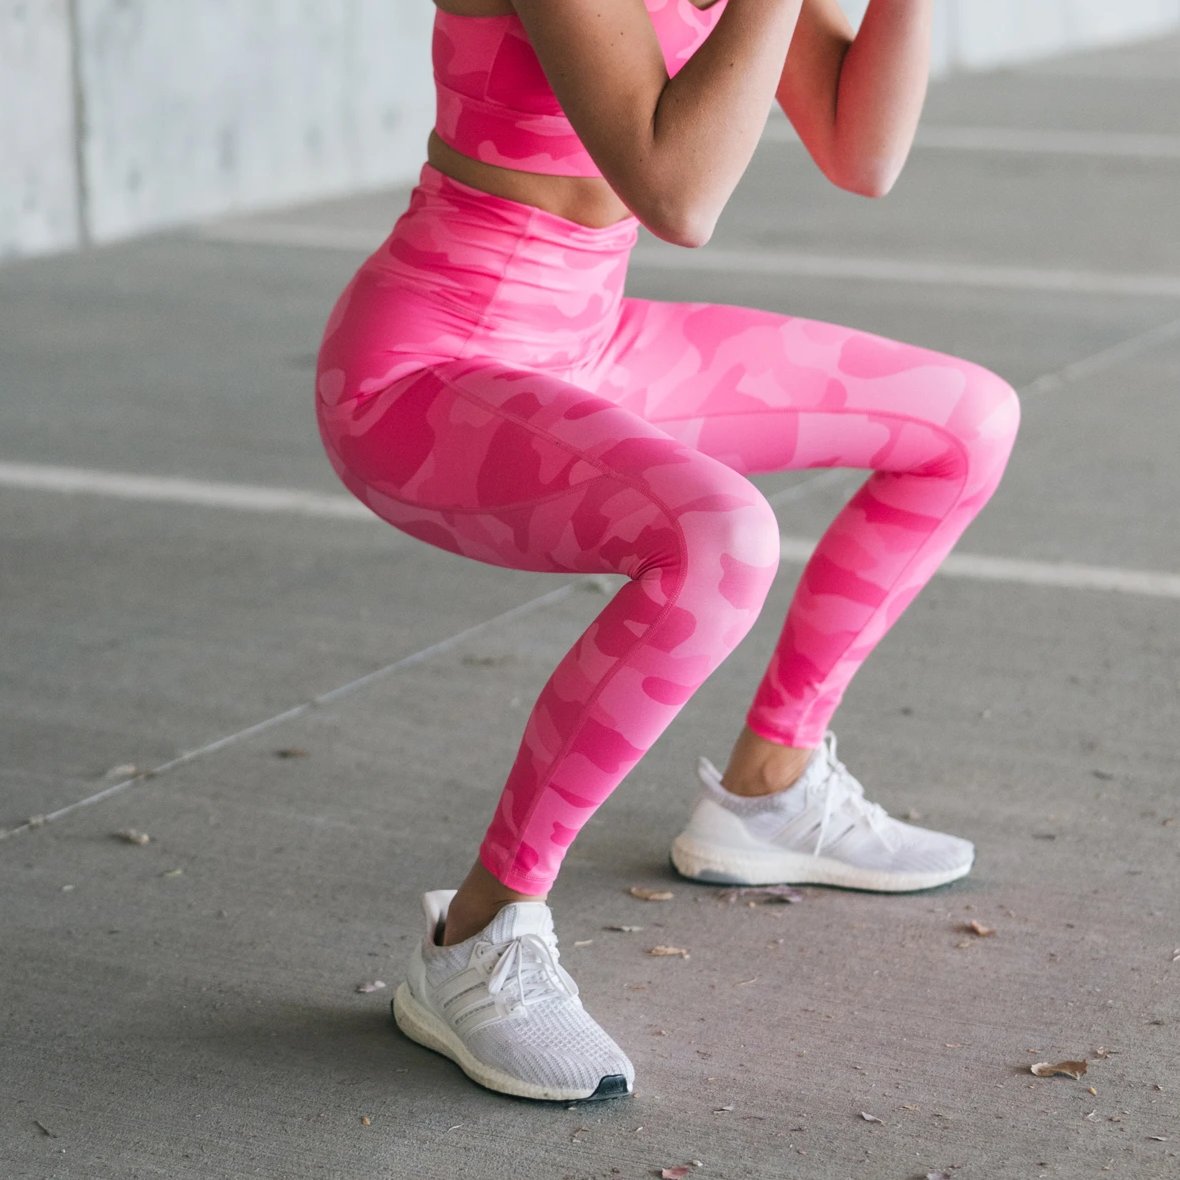 Inspire Leggings - Pink Camo | MT SPORT